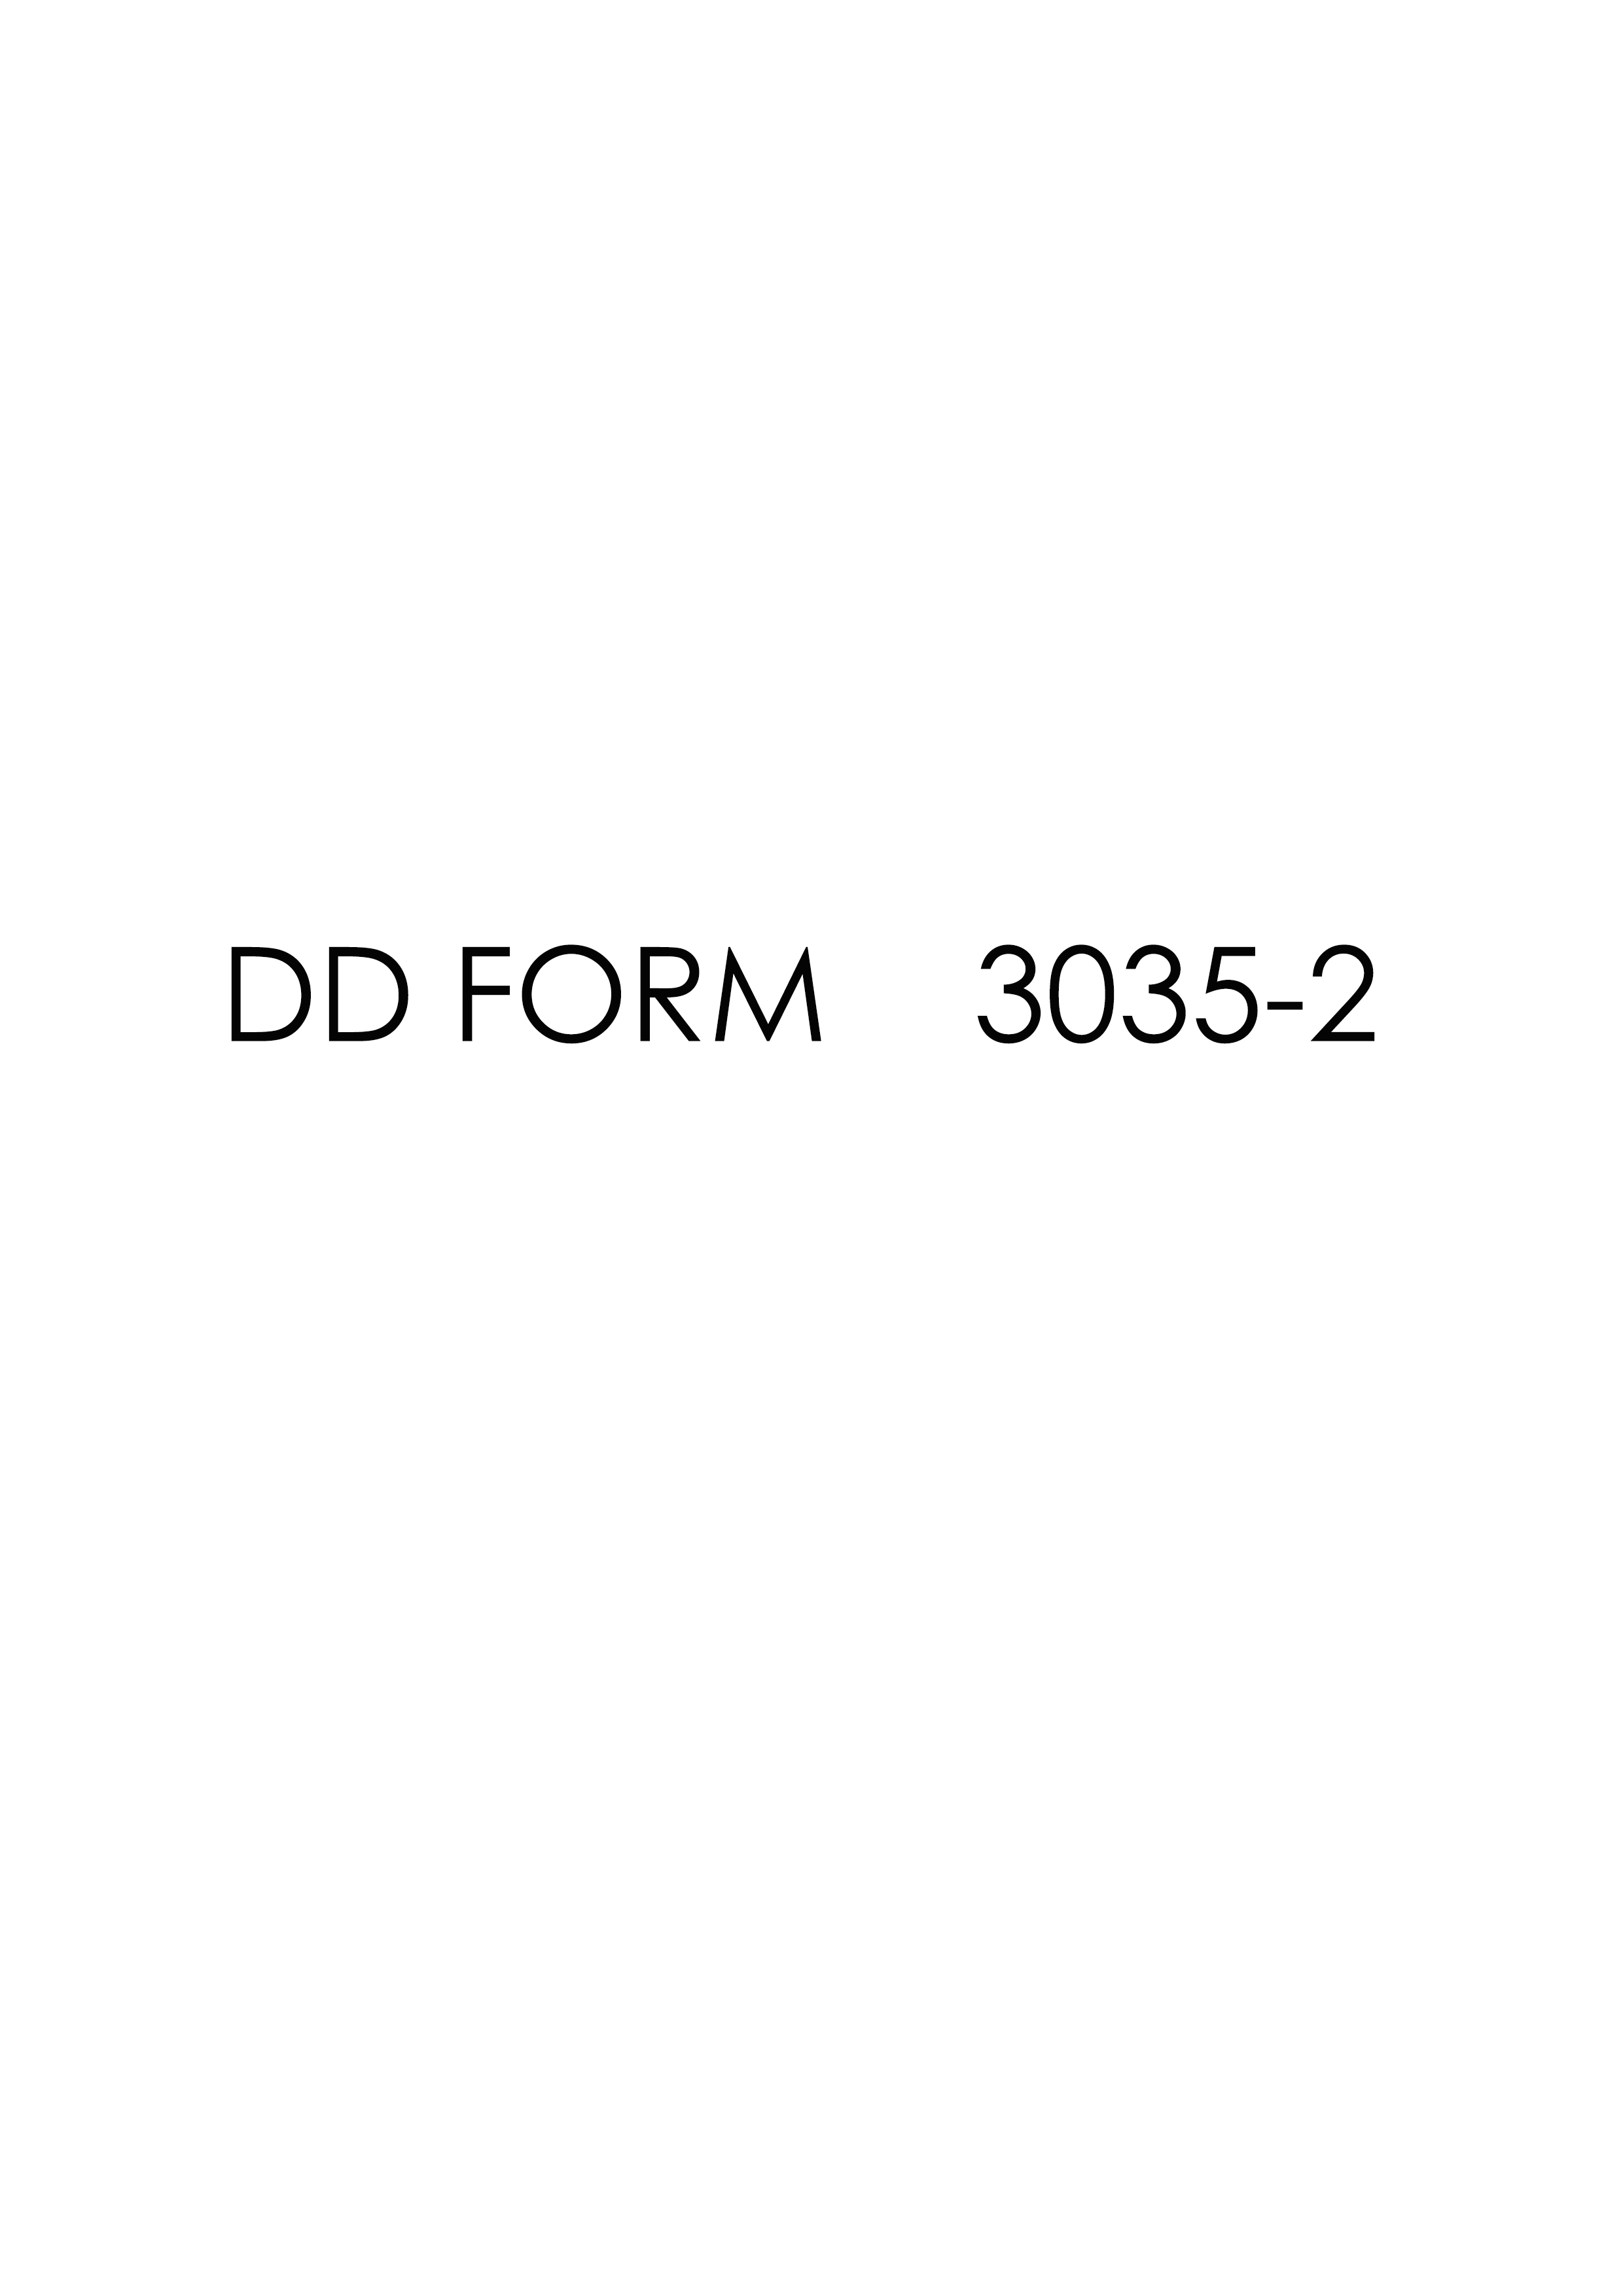 Download dd form 3035-2